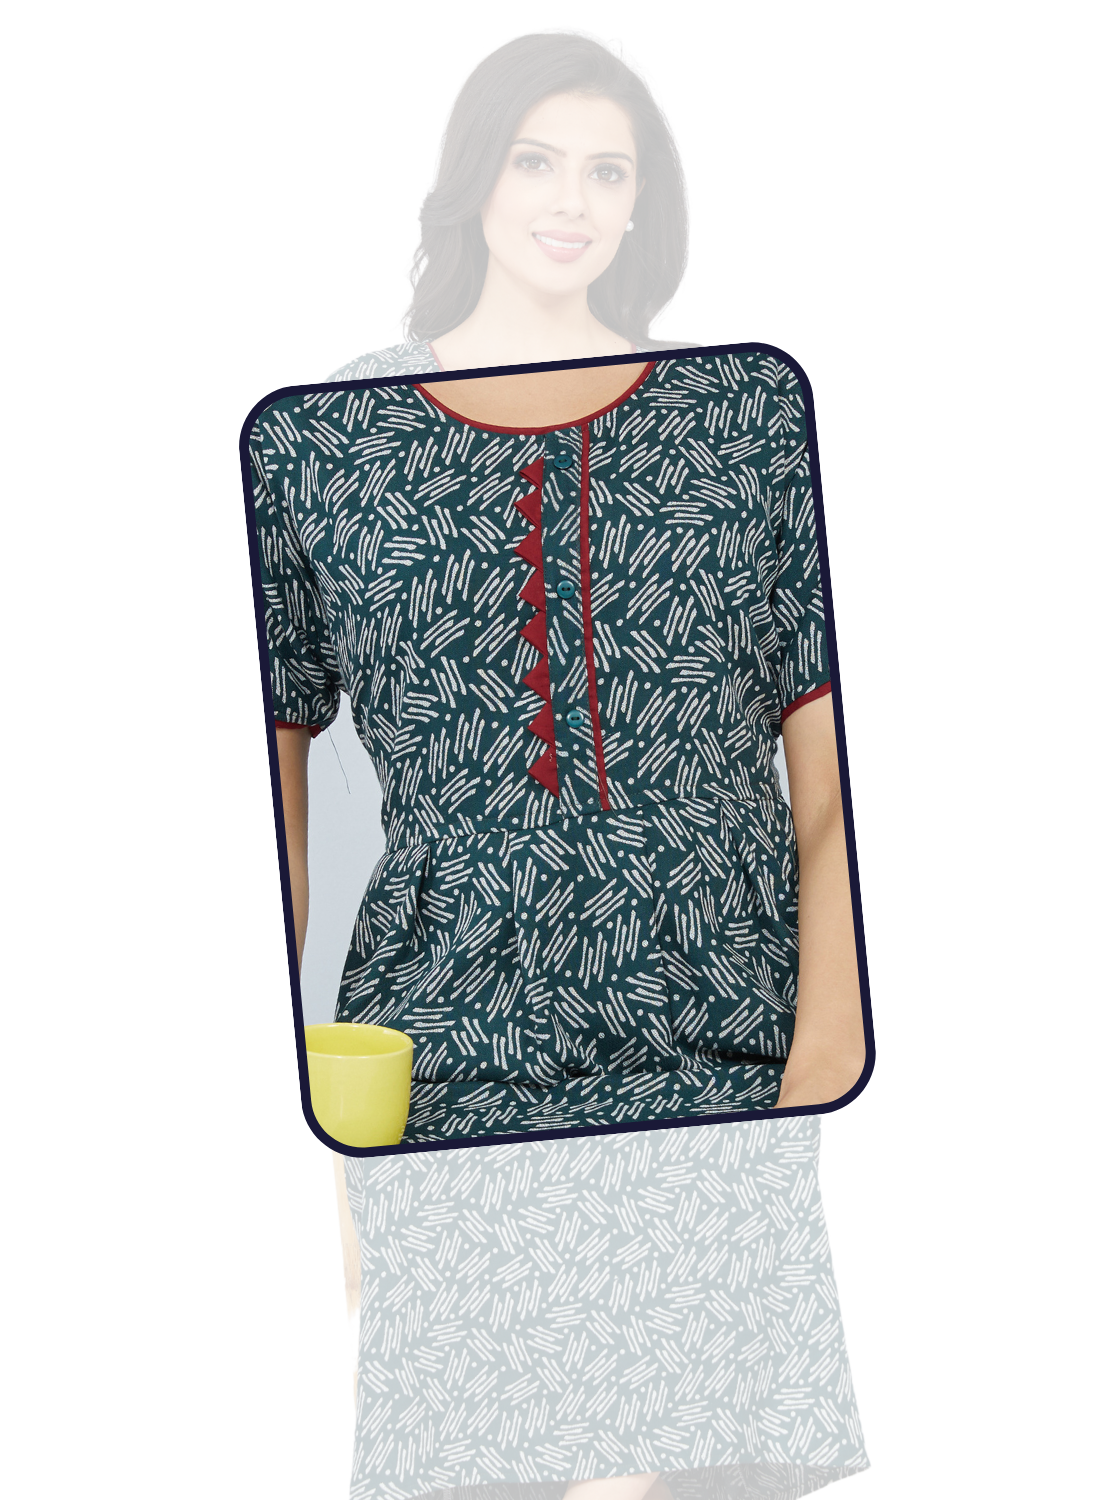 MANGAI New Premium Alpine KURTI Style | Full Length Stylish KURTI Model Nighties | Side Pocket | Half Sleeve | Perfect Nightwear Collection's for Trendy Women's